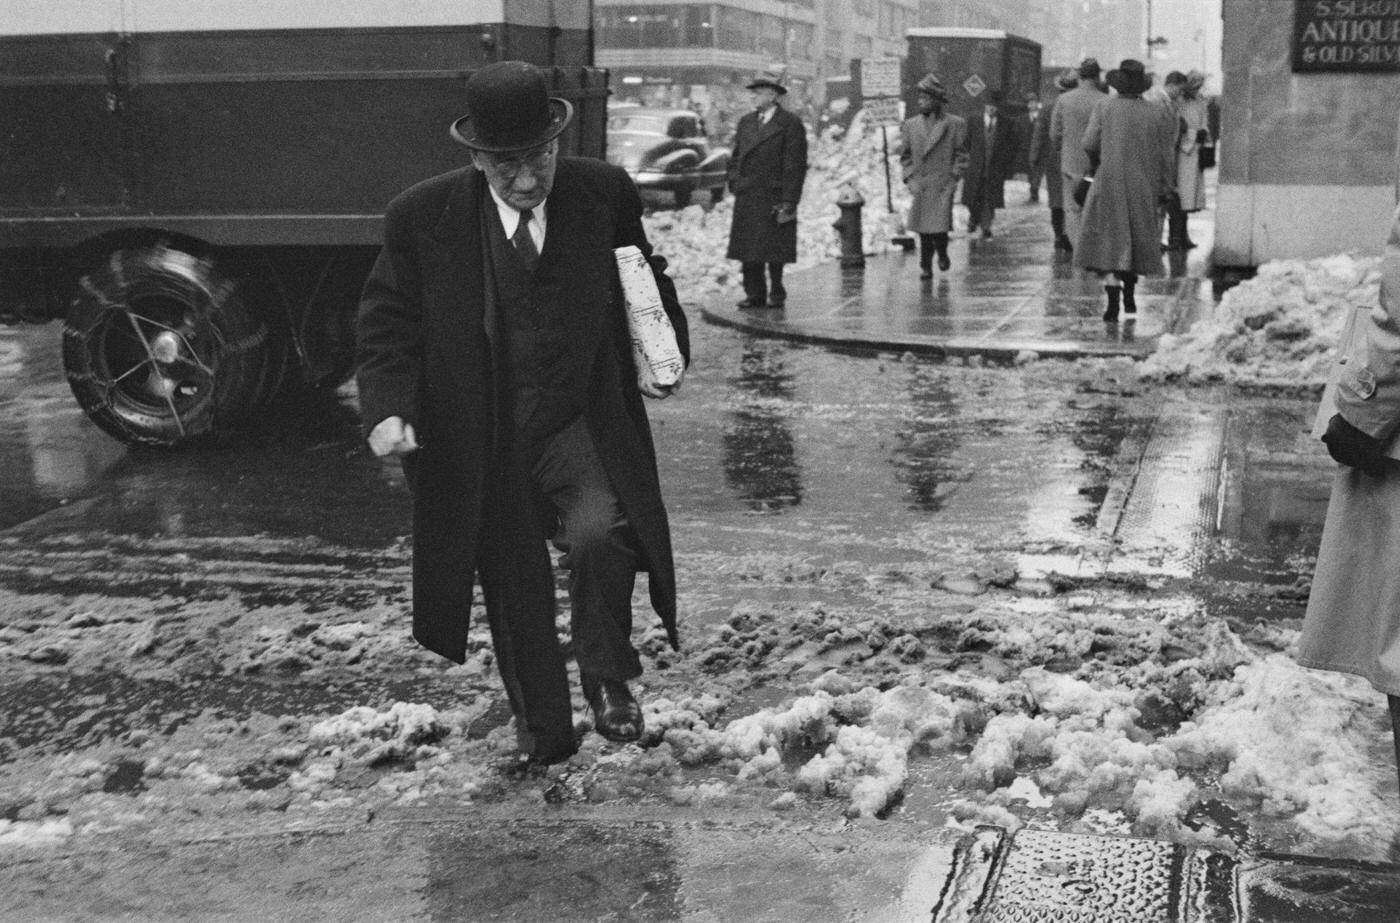 Winter In New York, Manhattan, 1945